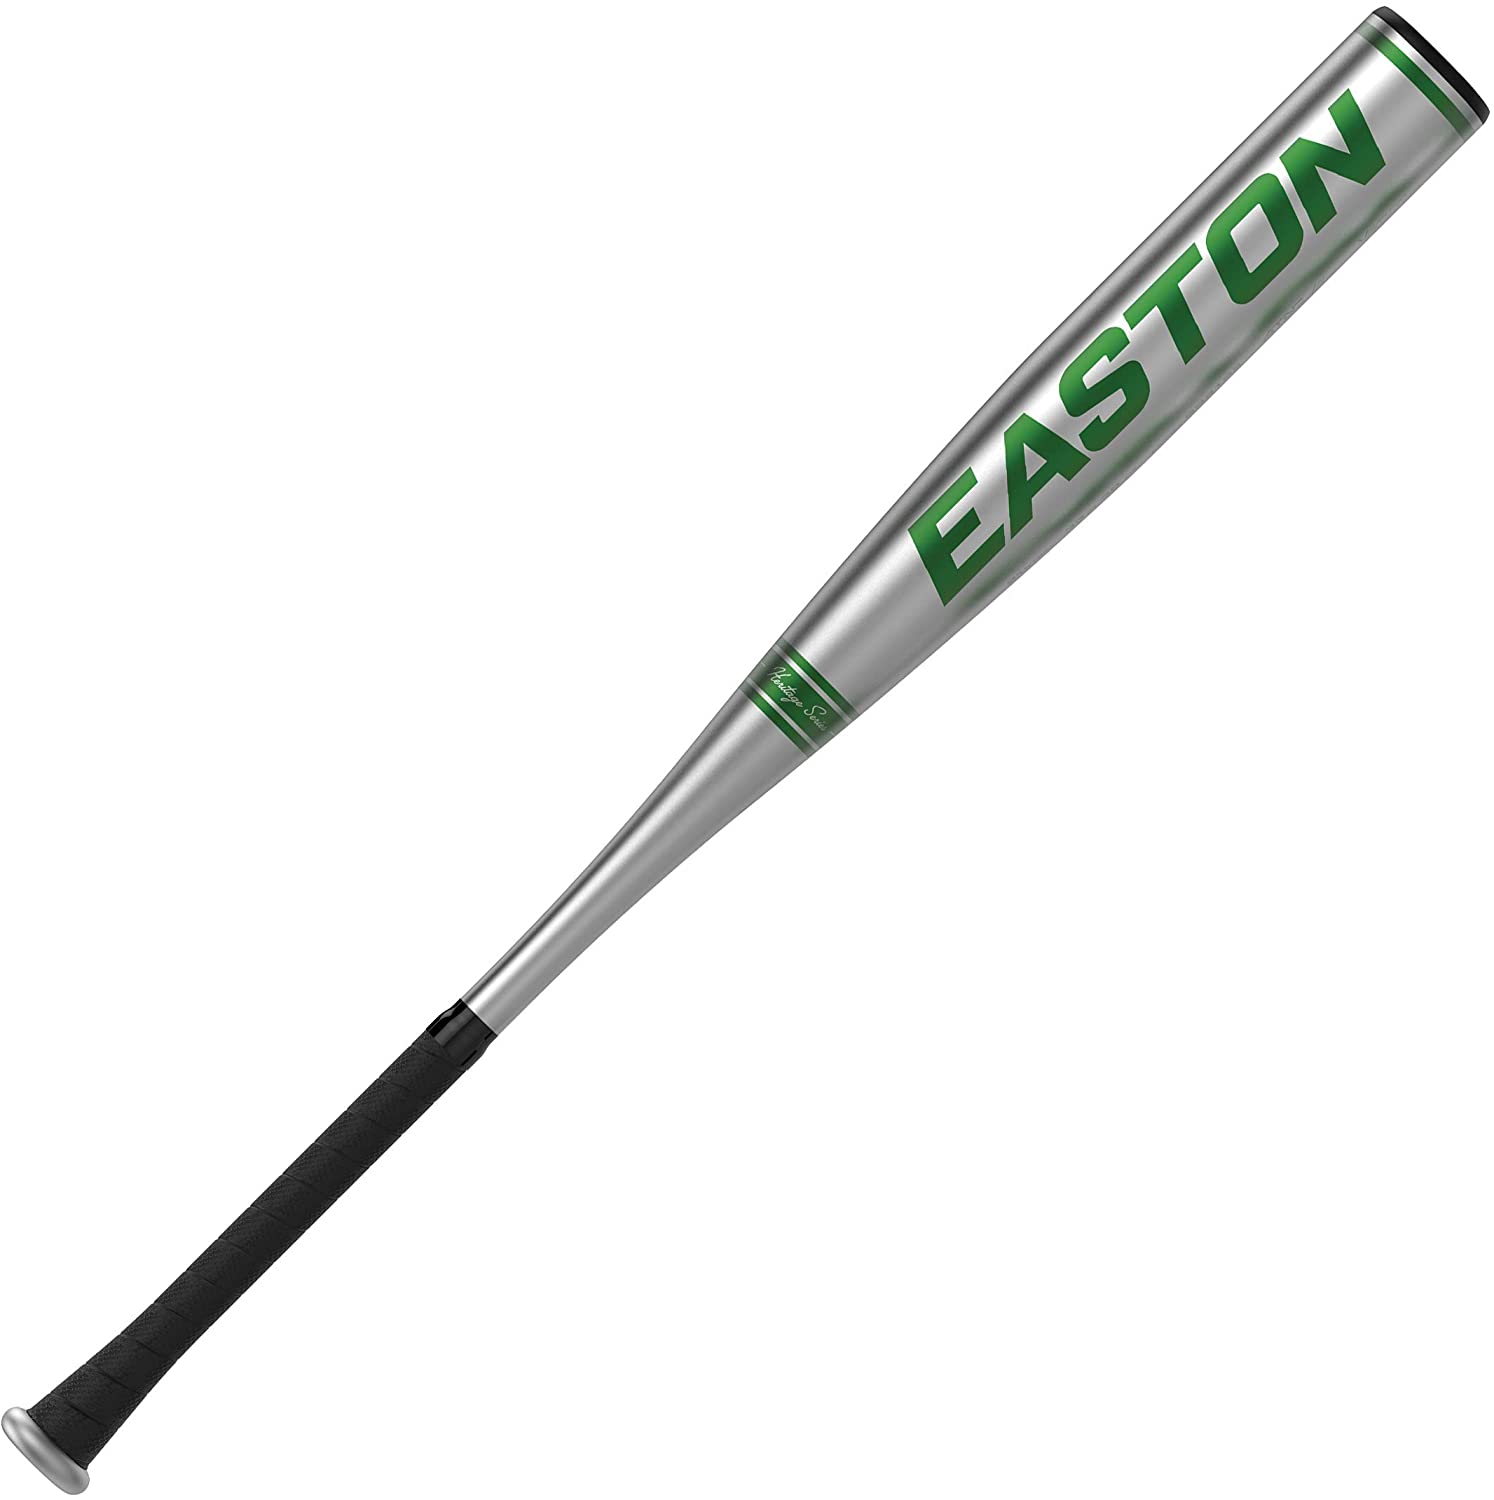 easton-b5-pro-big-barrel-3-bbcor-baseball-bat-33-inch-30-oz BB21B5-3330 Easton  <span>THE GREEN EASTON IS BACK! First introduced in 1978 the original